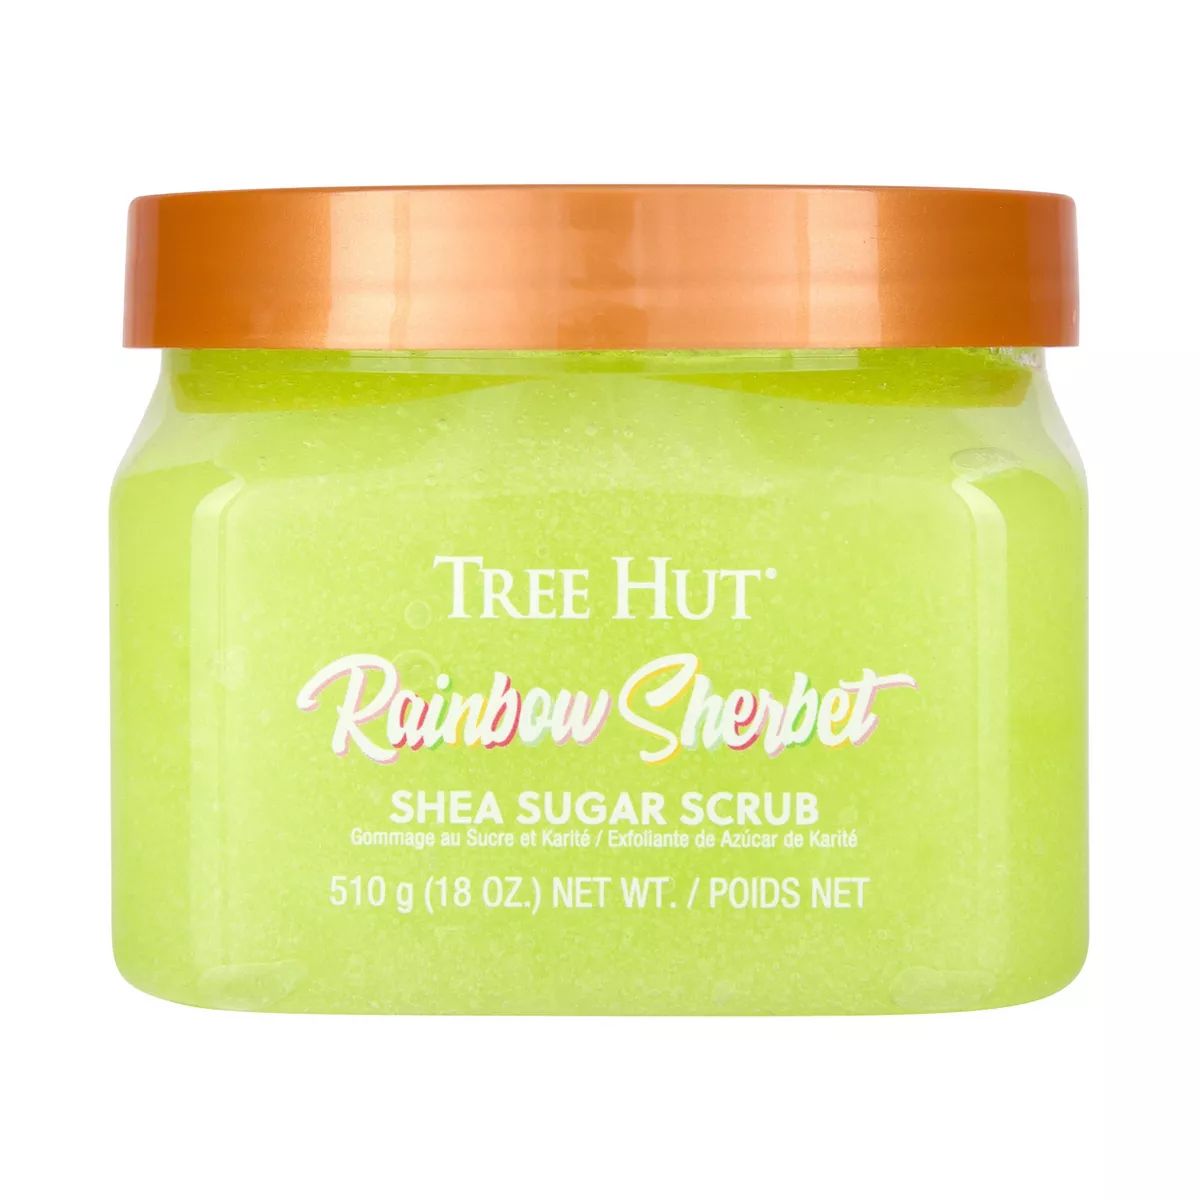 Tree Hut Rainbow Sherbet Shea Sugar Body Scrub - 18oz | Target